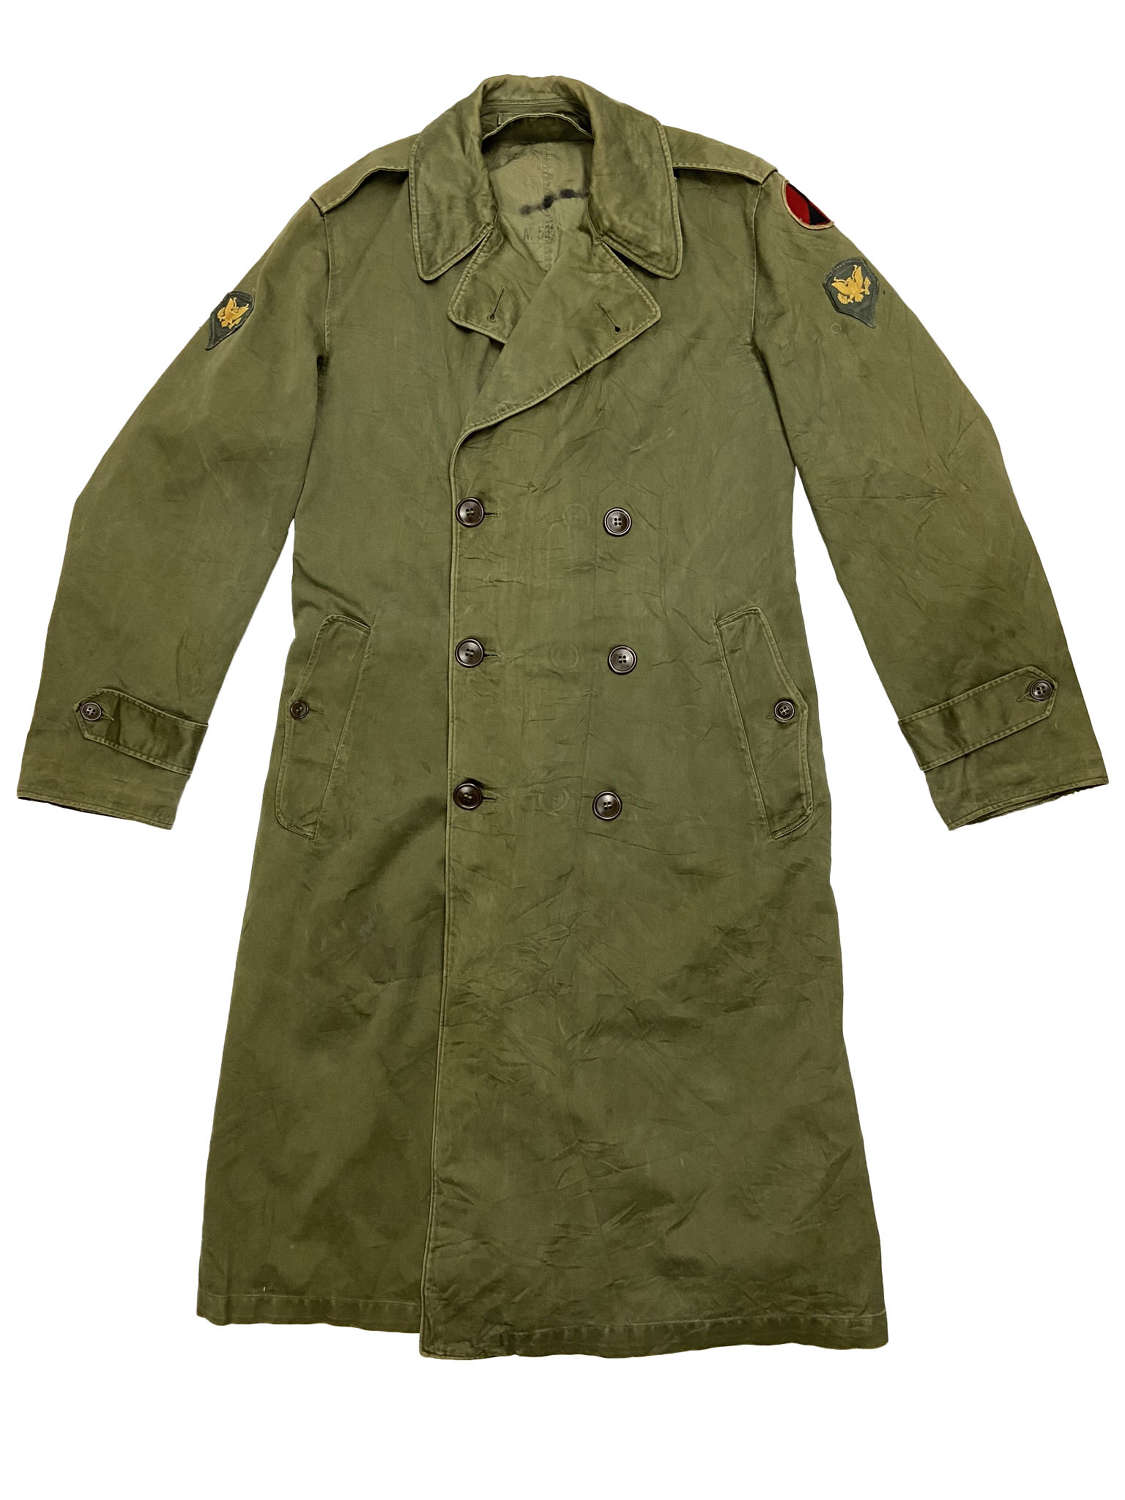 Original 1950s US Army O.G. 107 Raincoat - Size Small Long